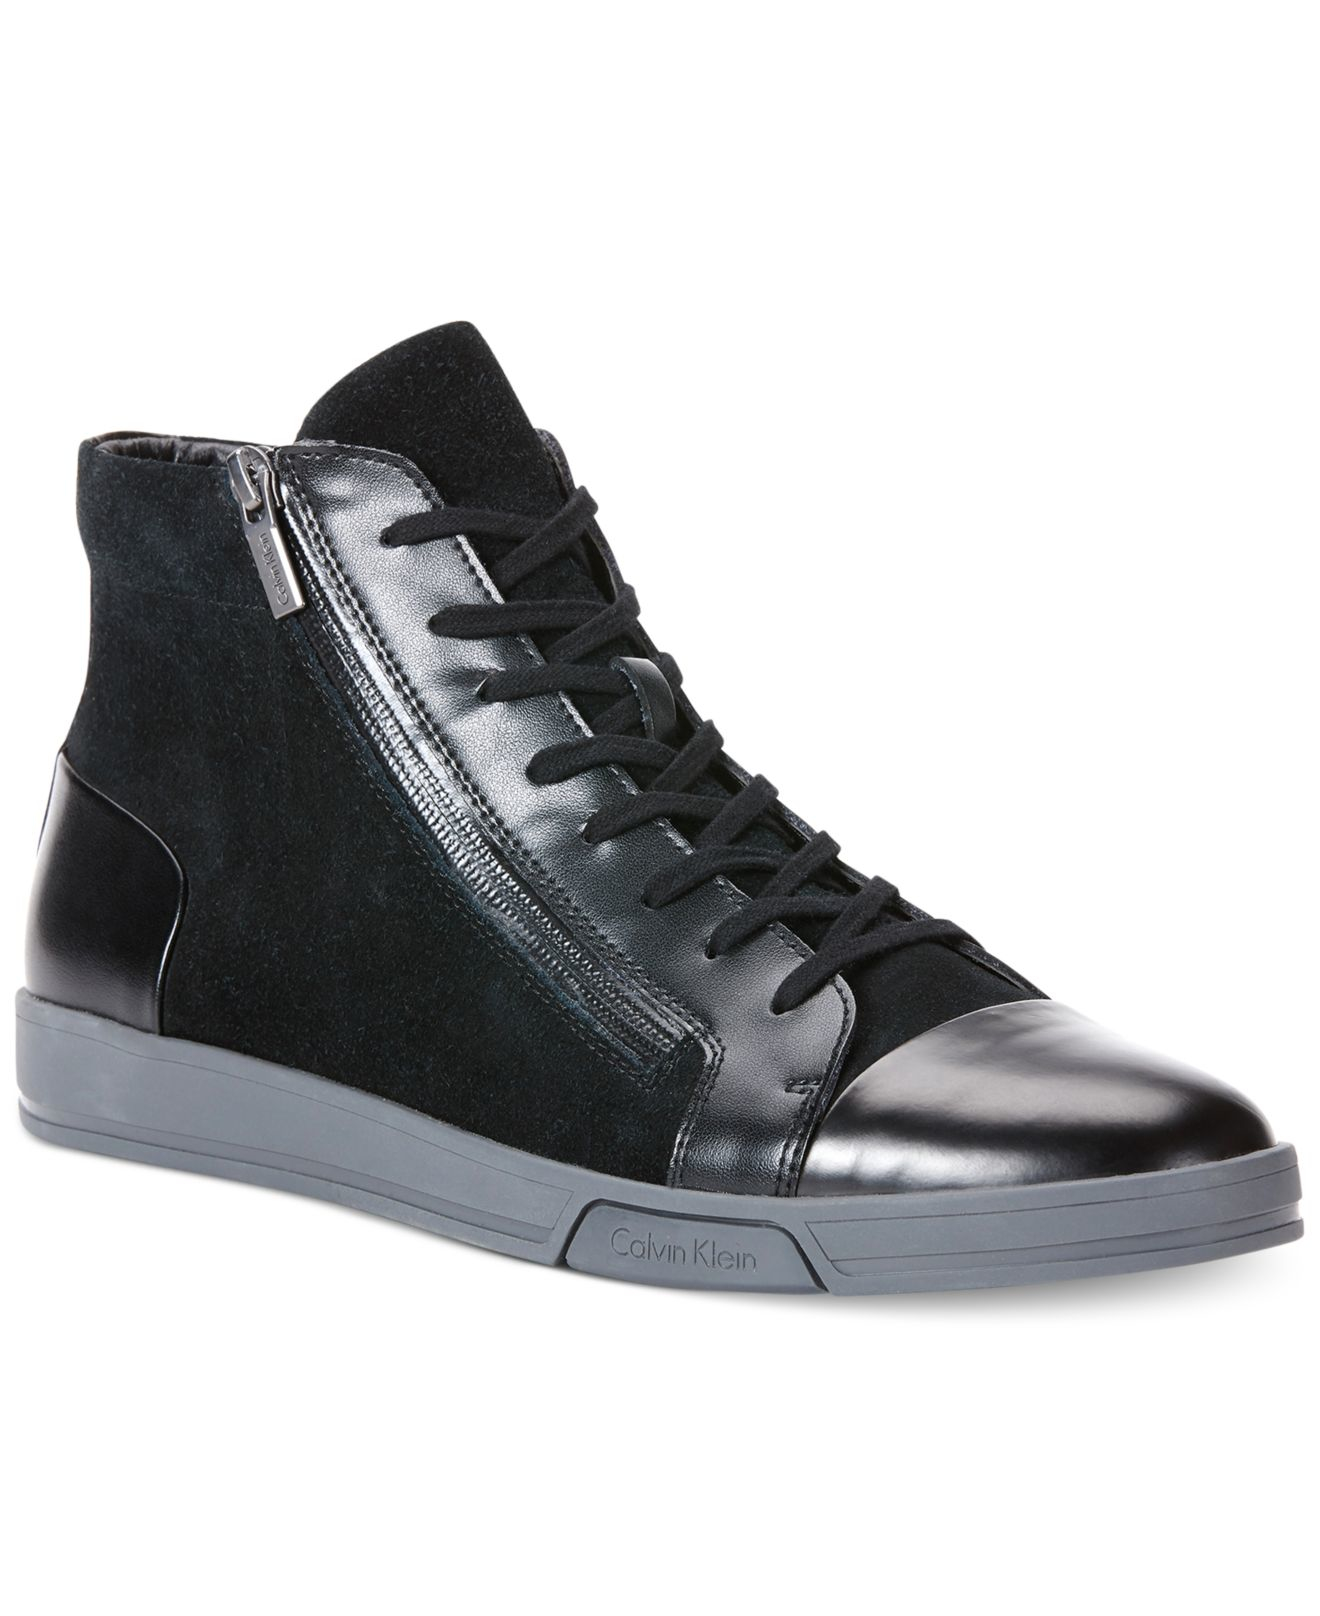 Lyst - Calvin Klein Berke Sneakers in Black for Men